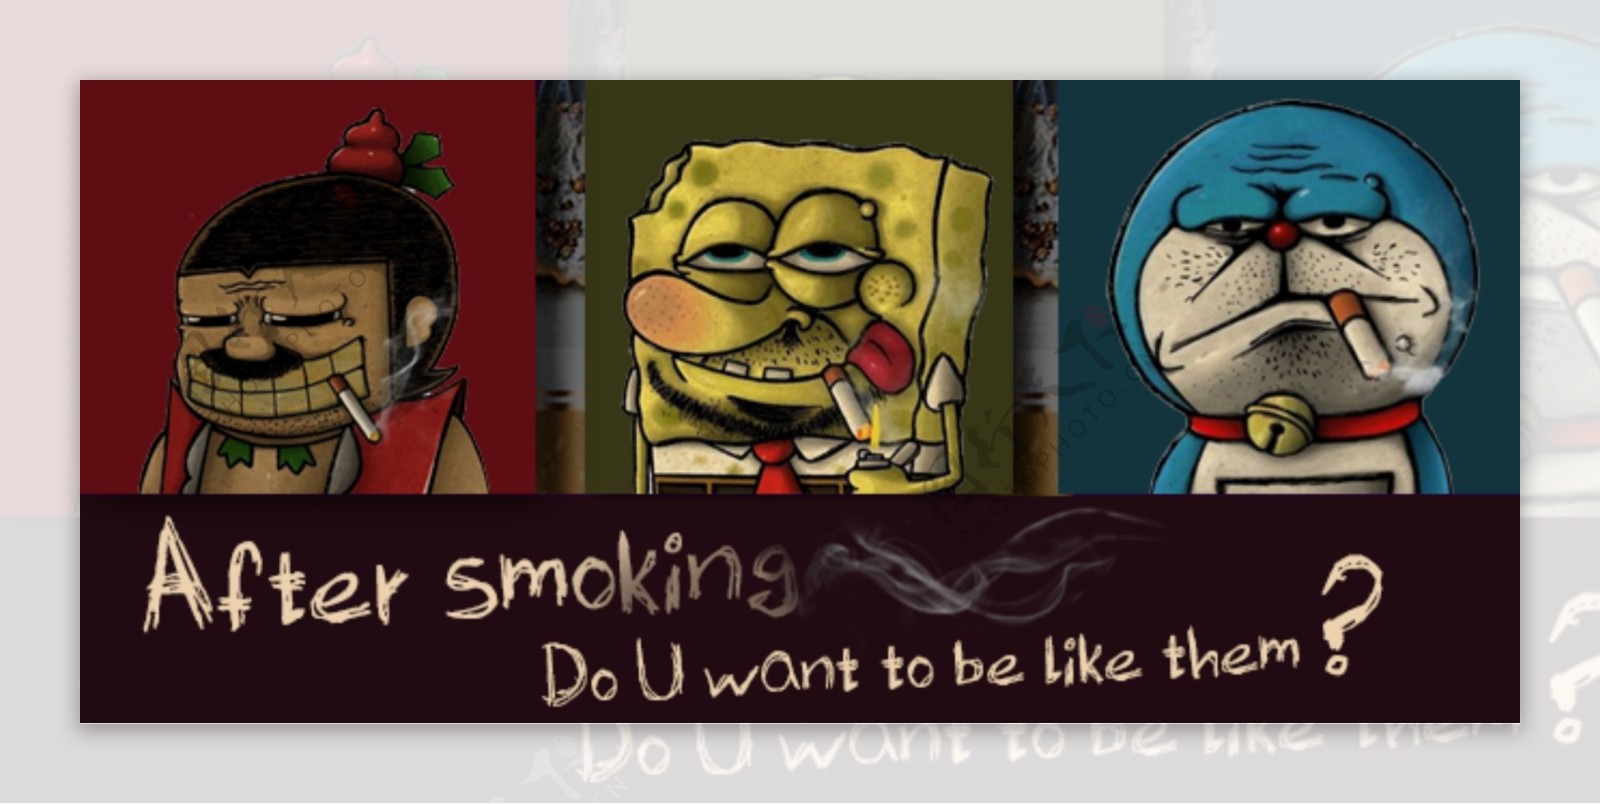 一张关于吸烟的banner